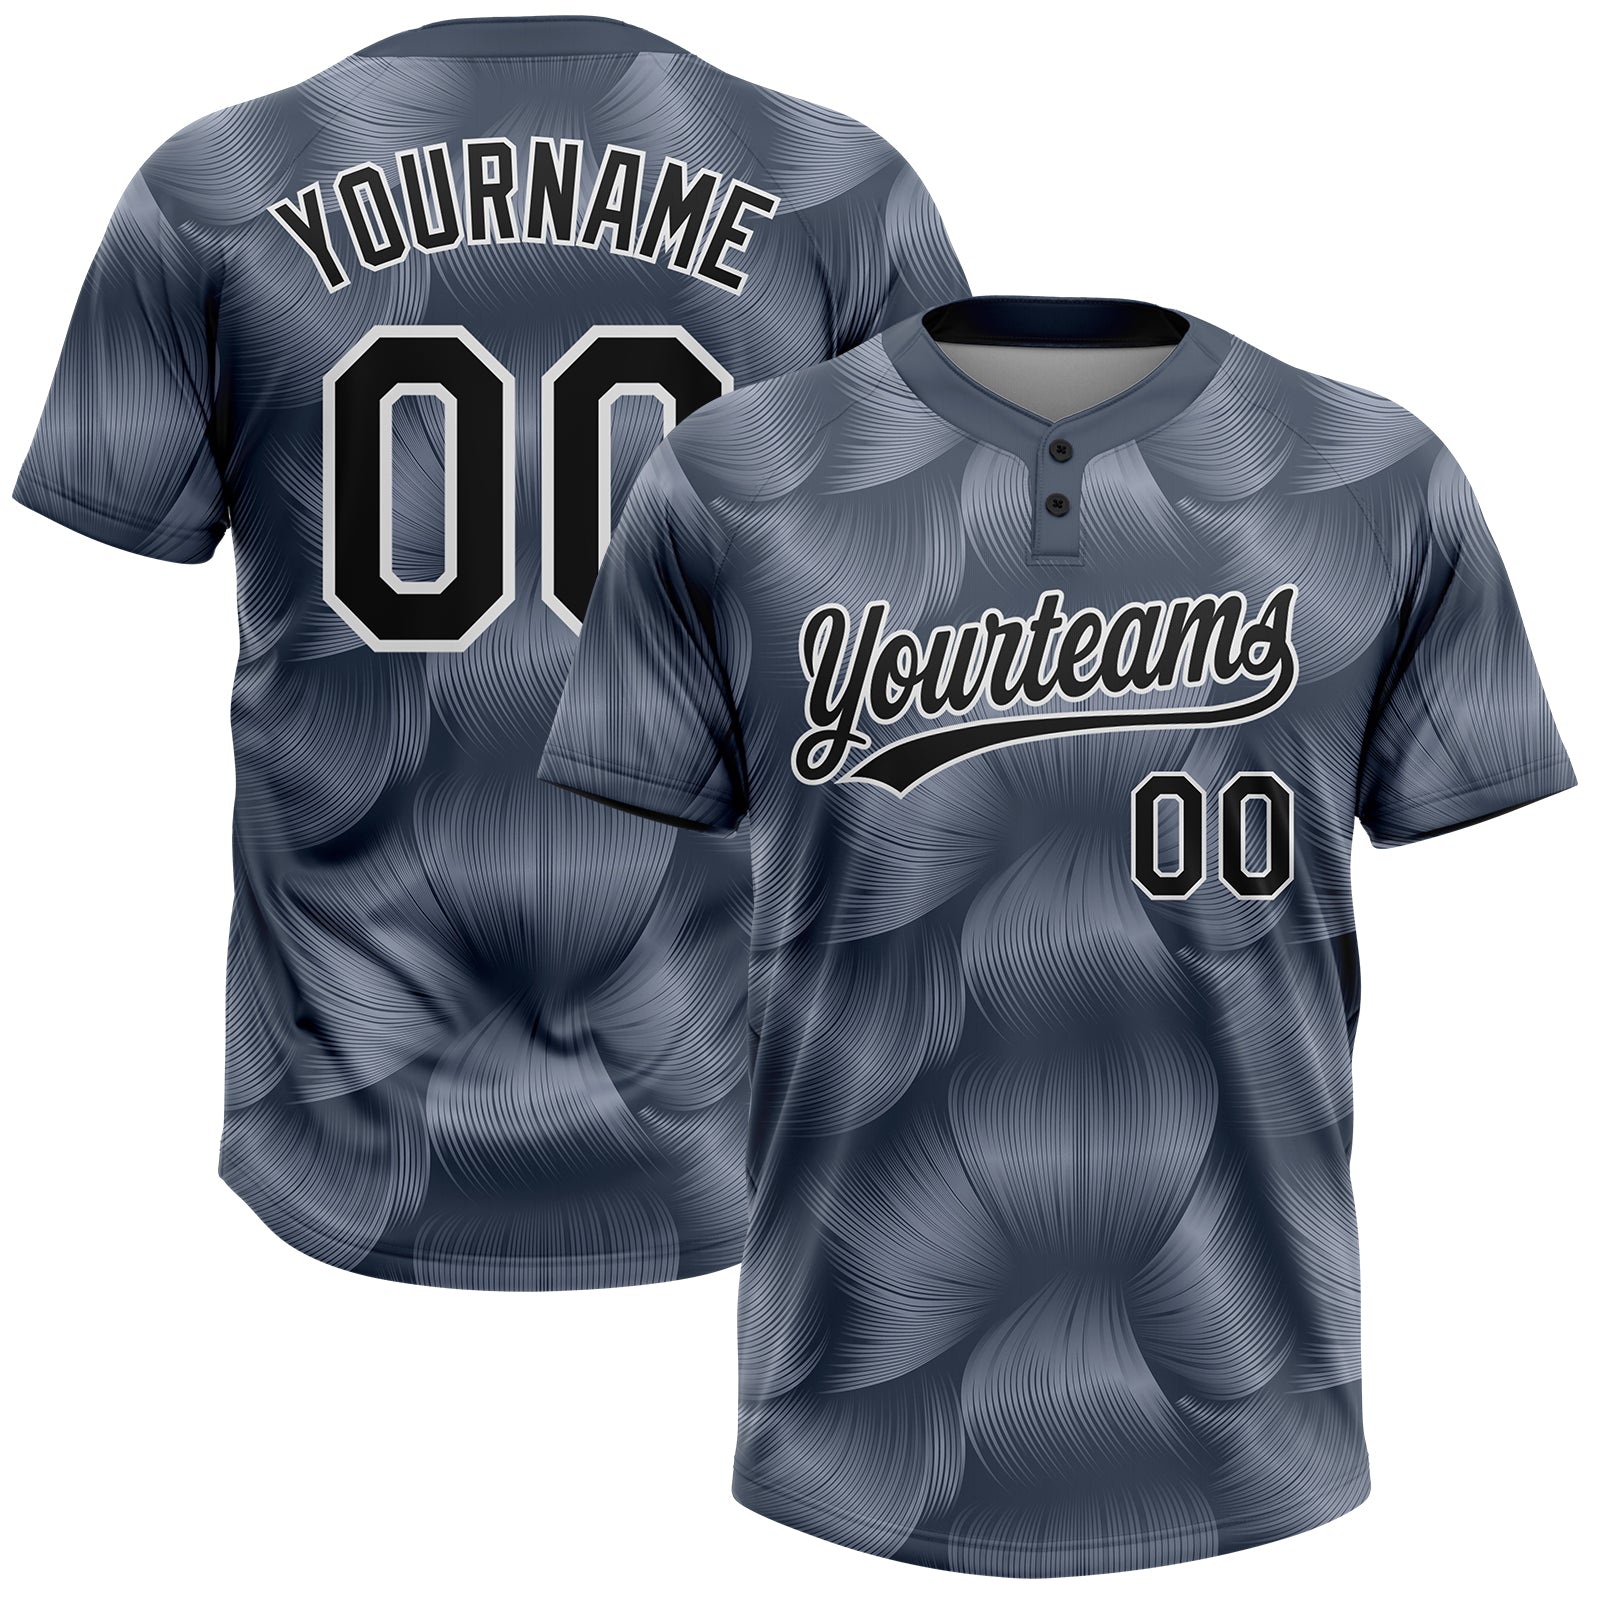 Youth Softball Jerseys Baseball Uniforms for Youth Teams Youth Baseball  Team Uniforms - China Customized Softball Uniform and Button Down Baseball  Uniform price